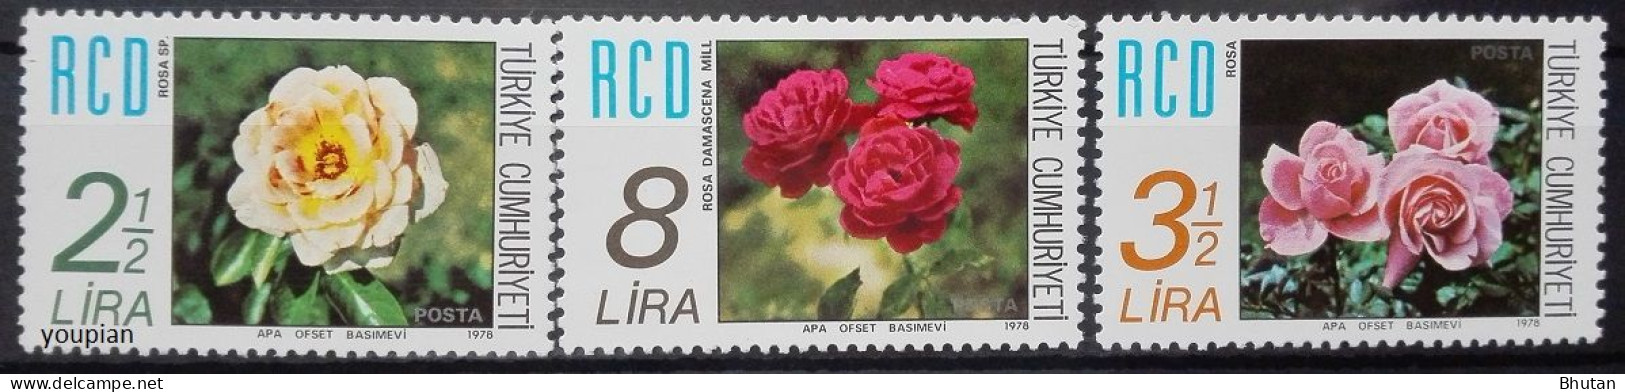 Türkiye 1978, RCD - Rose From Türkiye, Iran And Pakistan, MNH Stamps Set - Ongebruikt